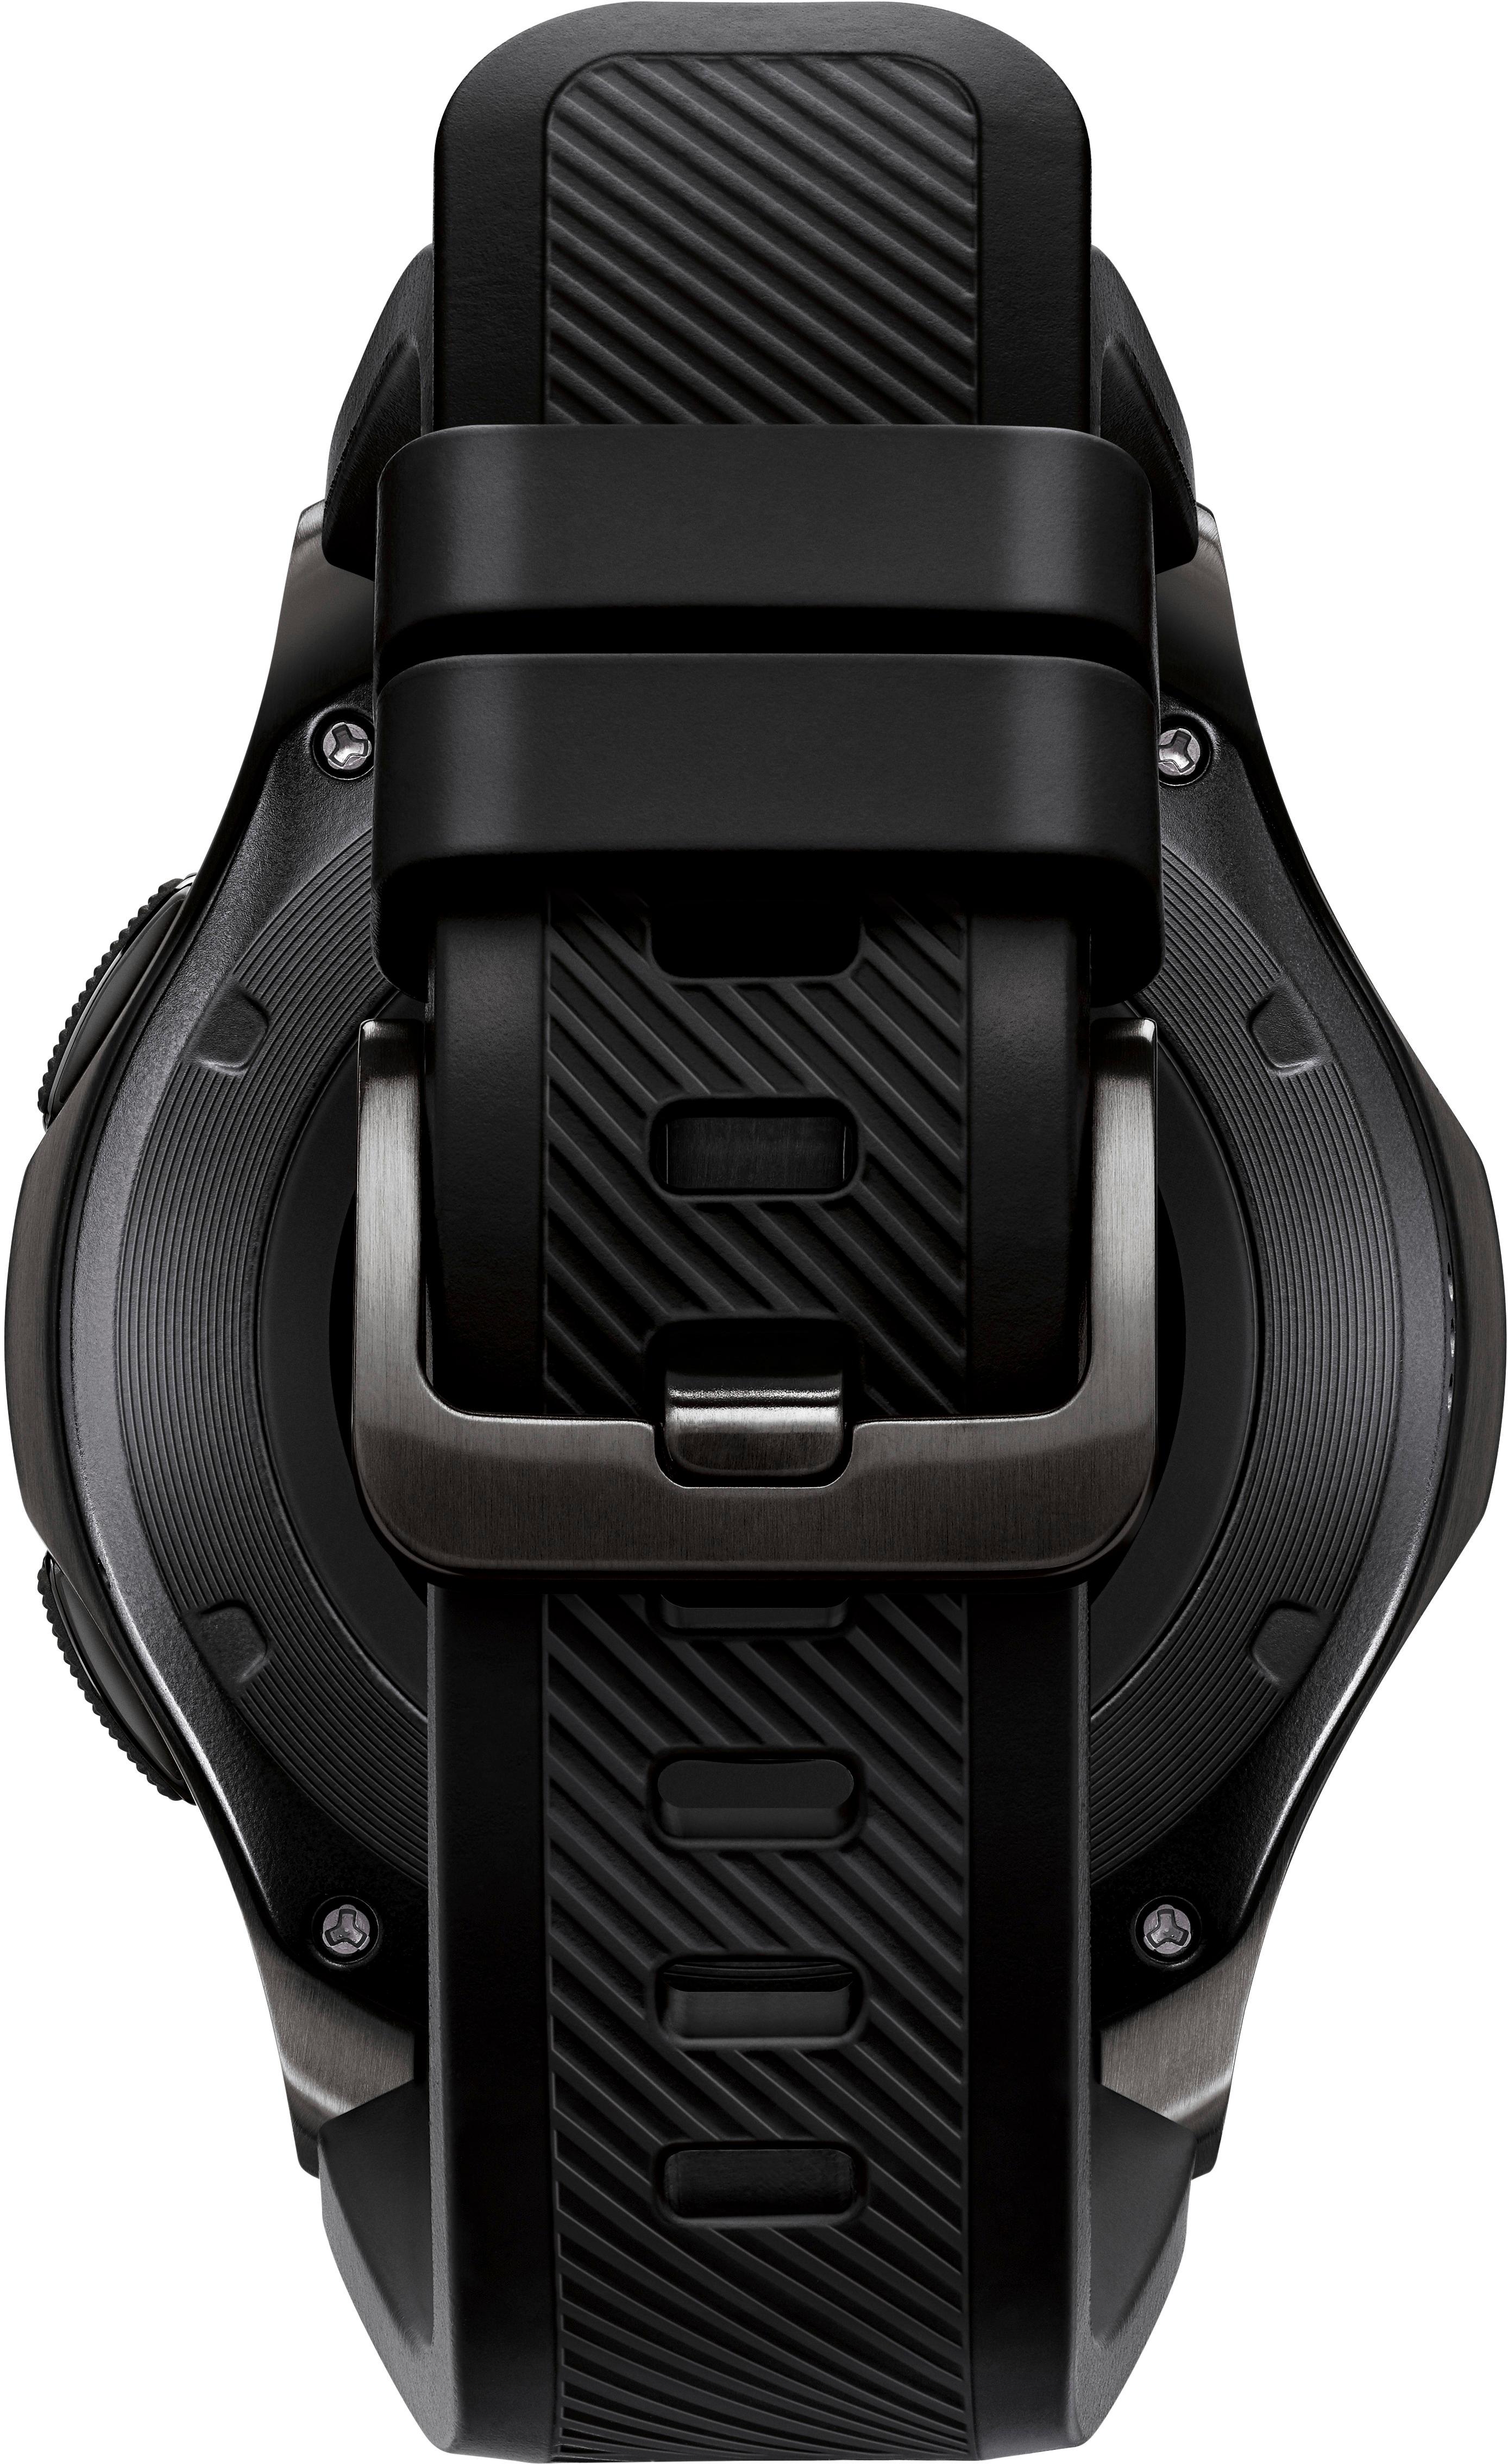 Samsung Gear S3 Frontier Smartwatch 46mm Stainless - Best Buy